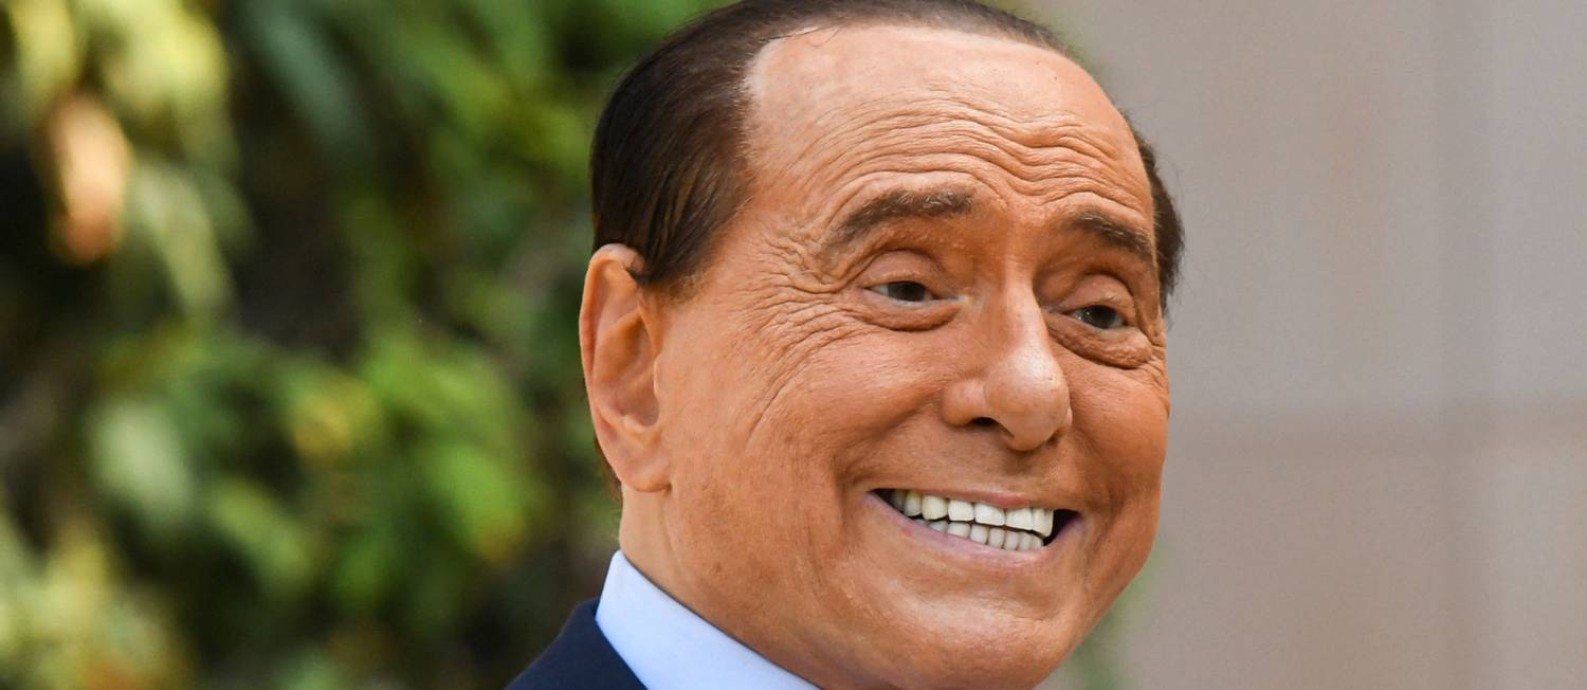 Silvio Berlusconi: ex-primeiro-ministro da Itália desiste de candidatar-se à Presidência Foto: PIERO CRUCIATTI / AFP/14-09-2020